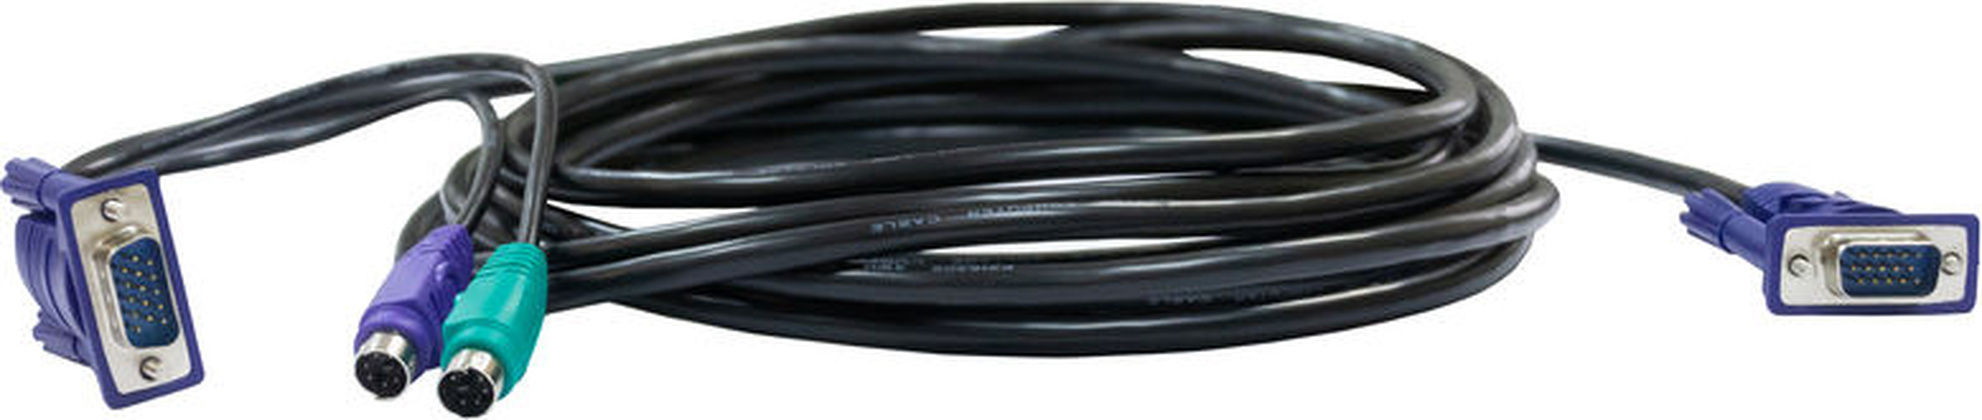 KVM-кабель D-Link DKVM-CB3/B1A - 3,0 метра / Для переключателей /